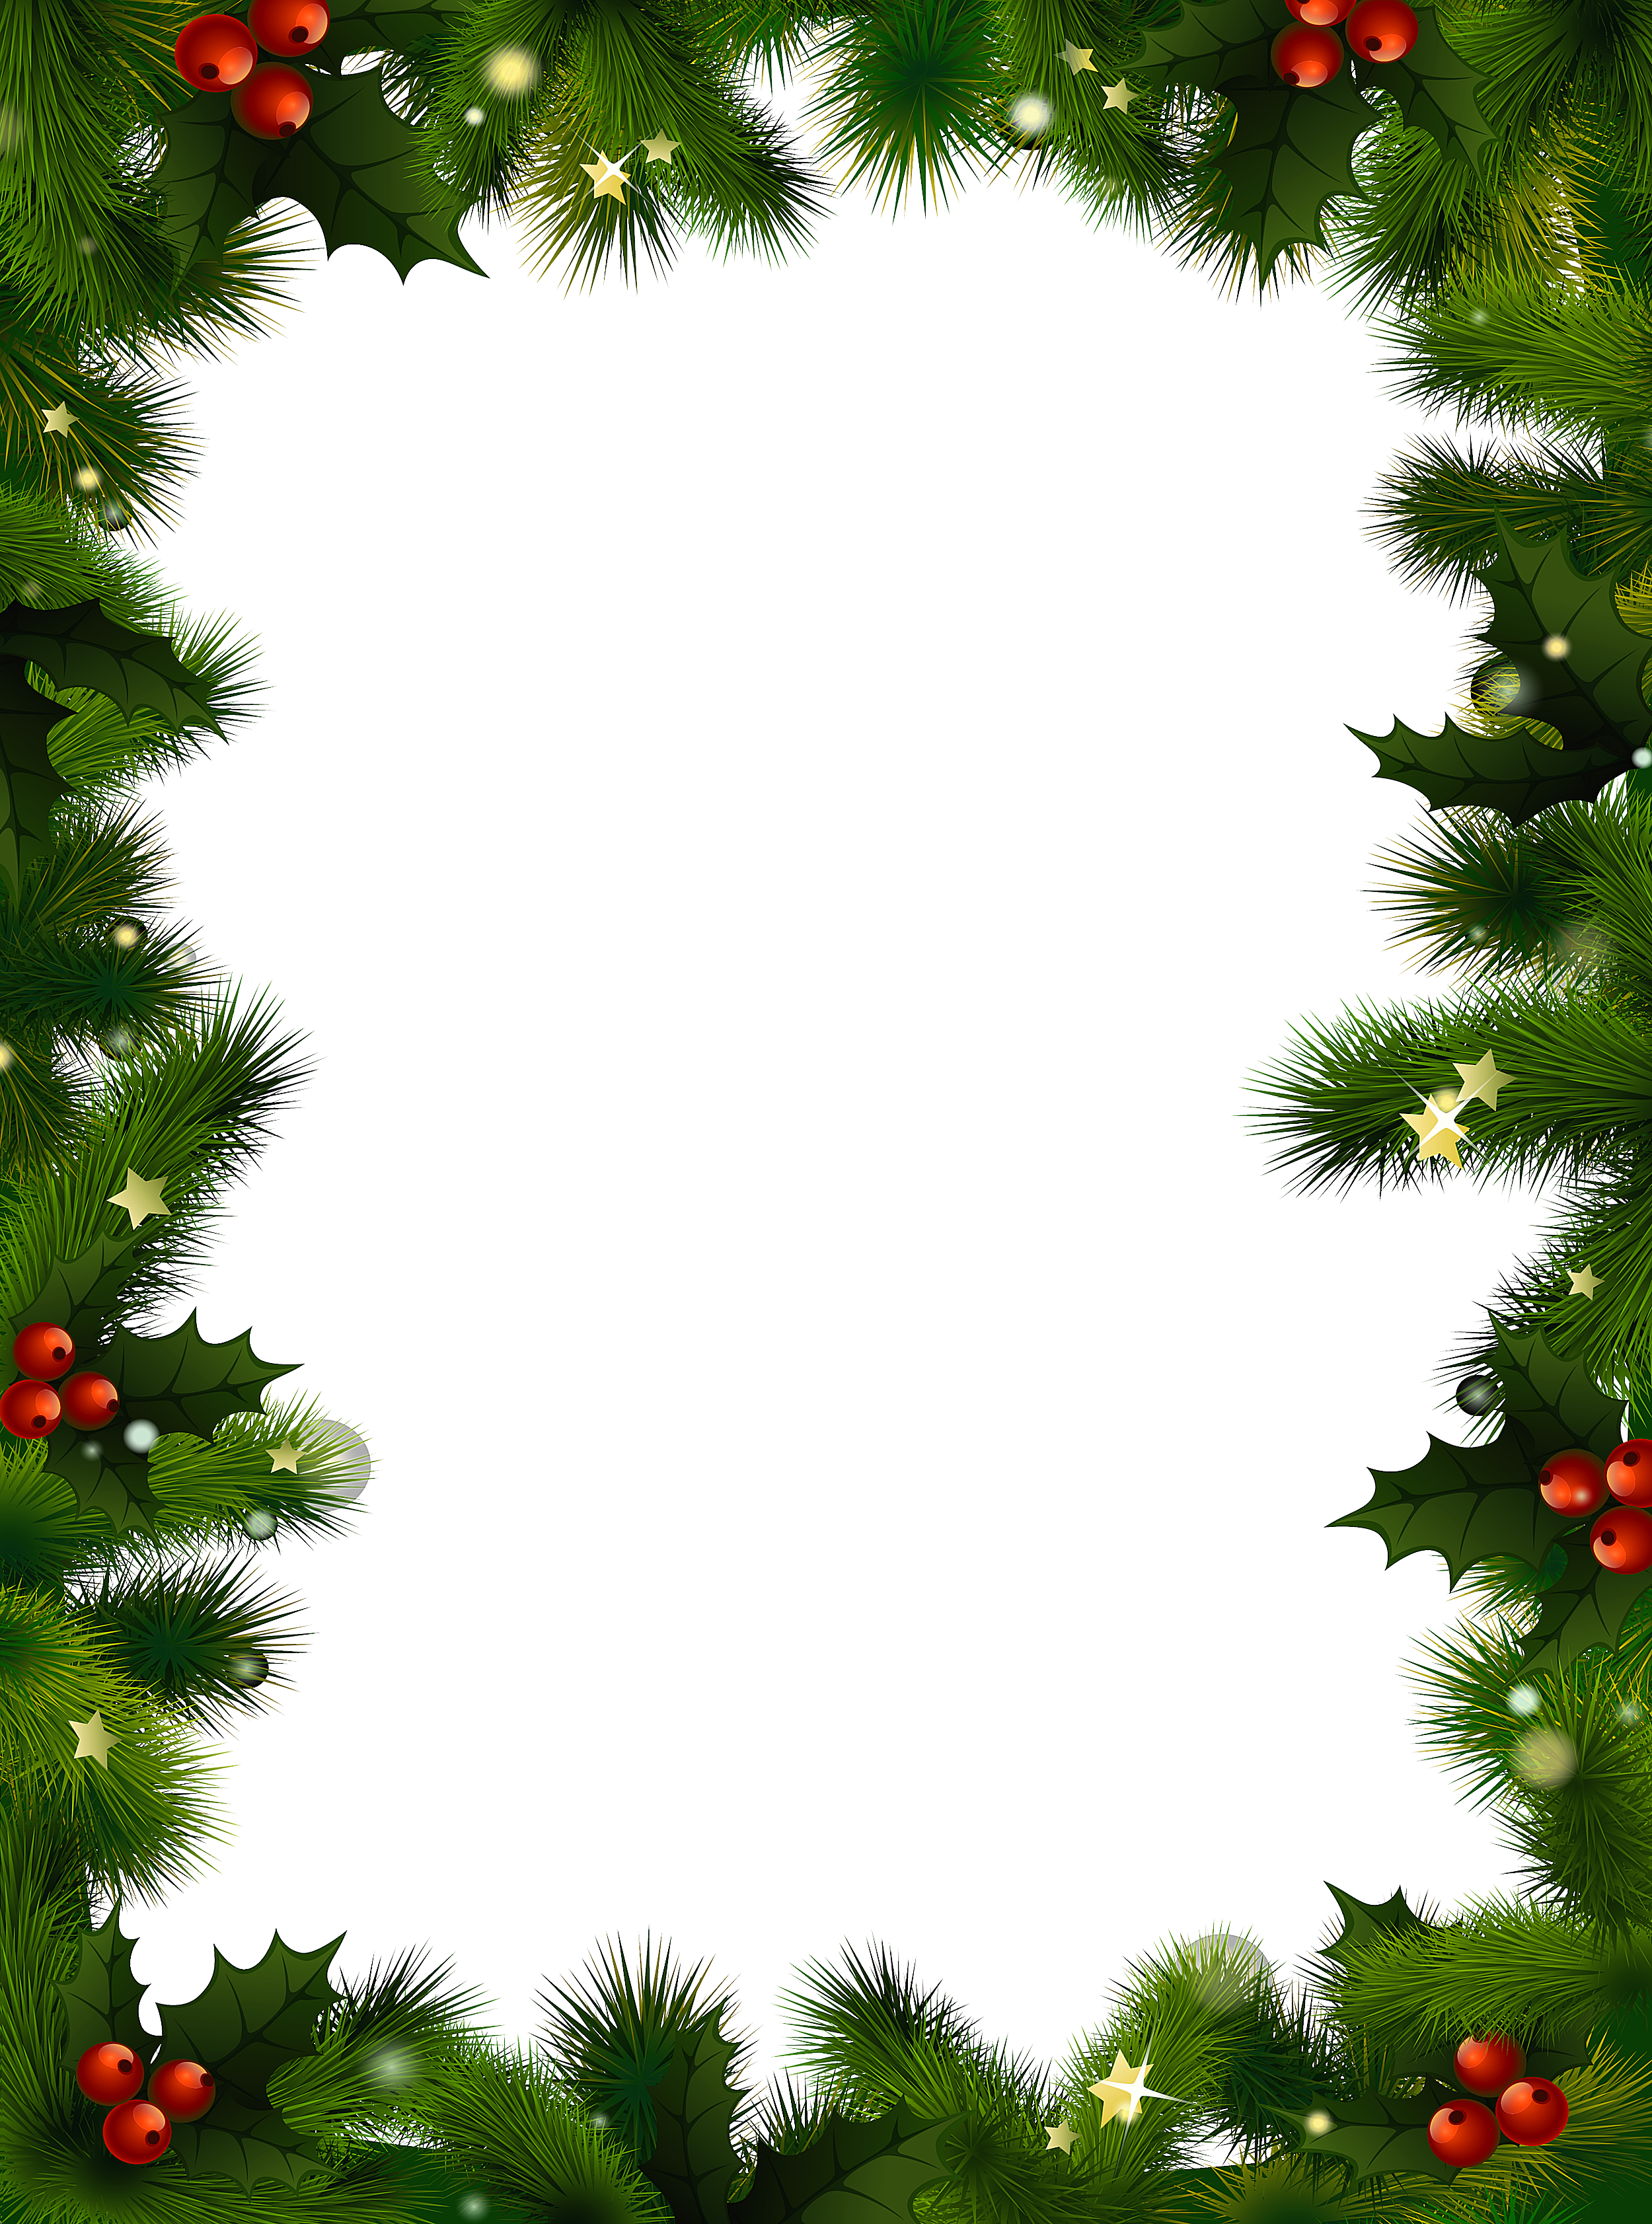 horizontal-christmas-tree-border-clipart-20-free-cliparts-download